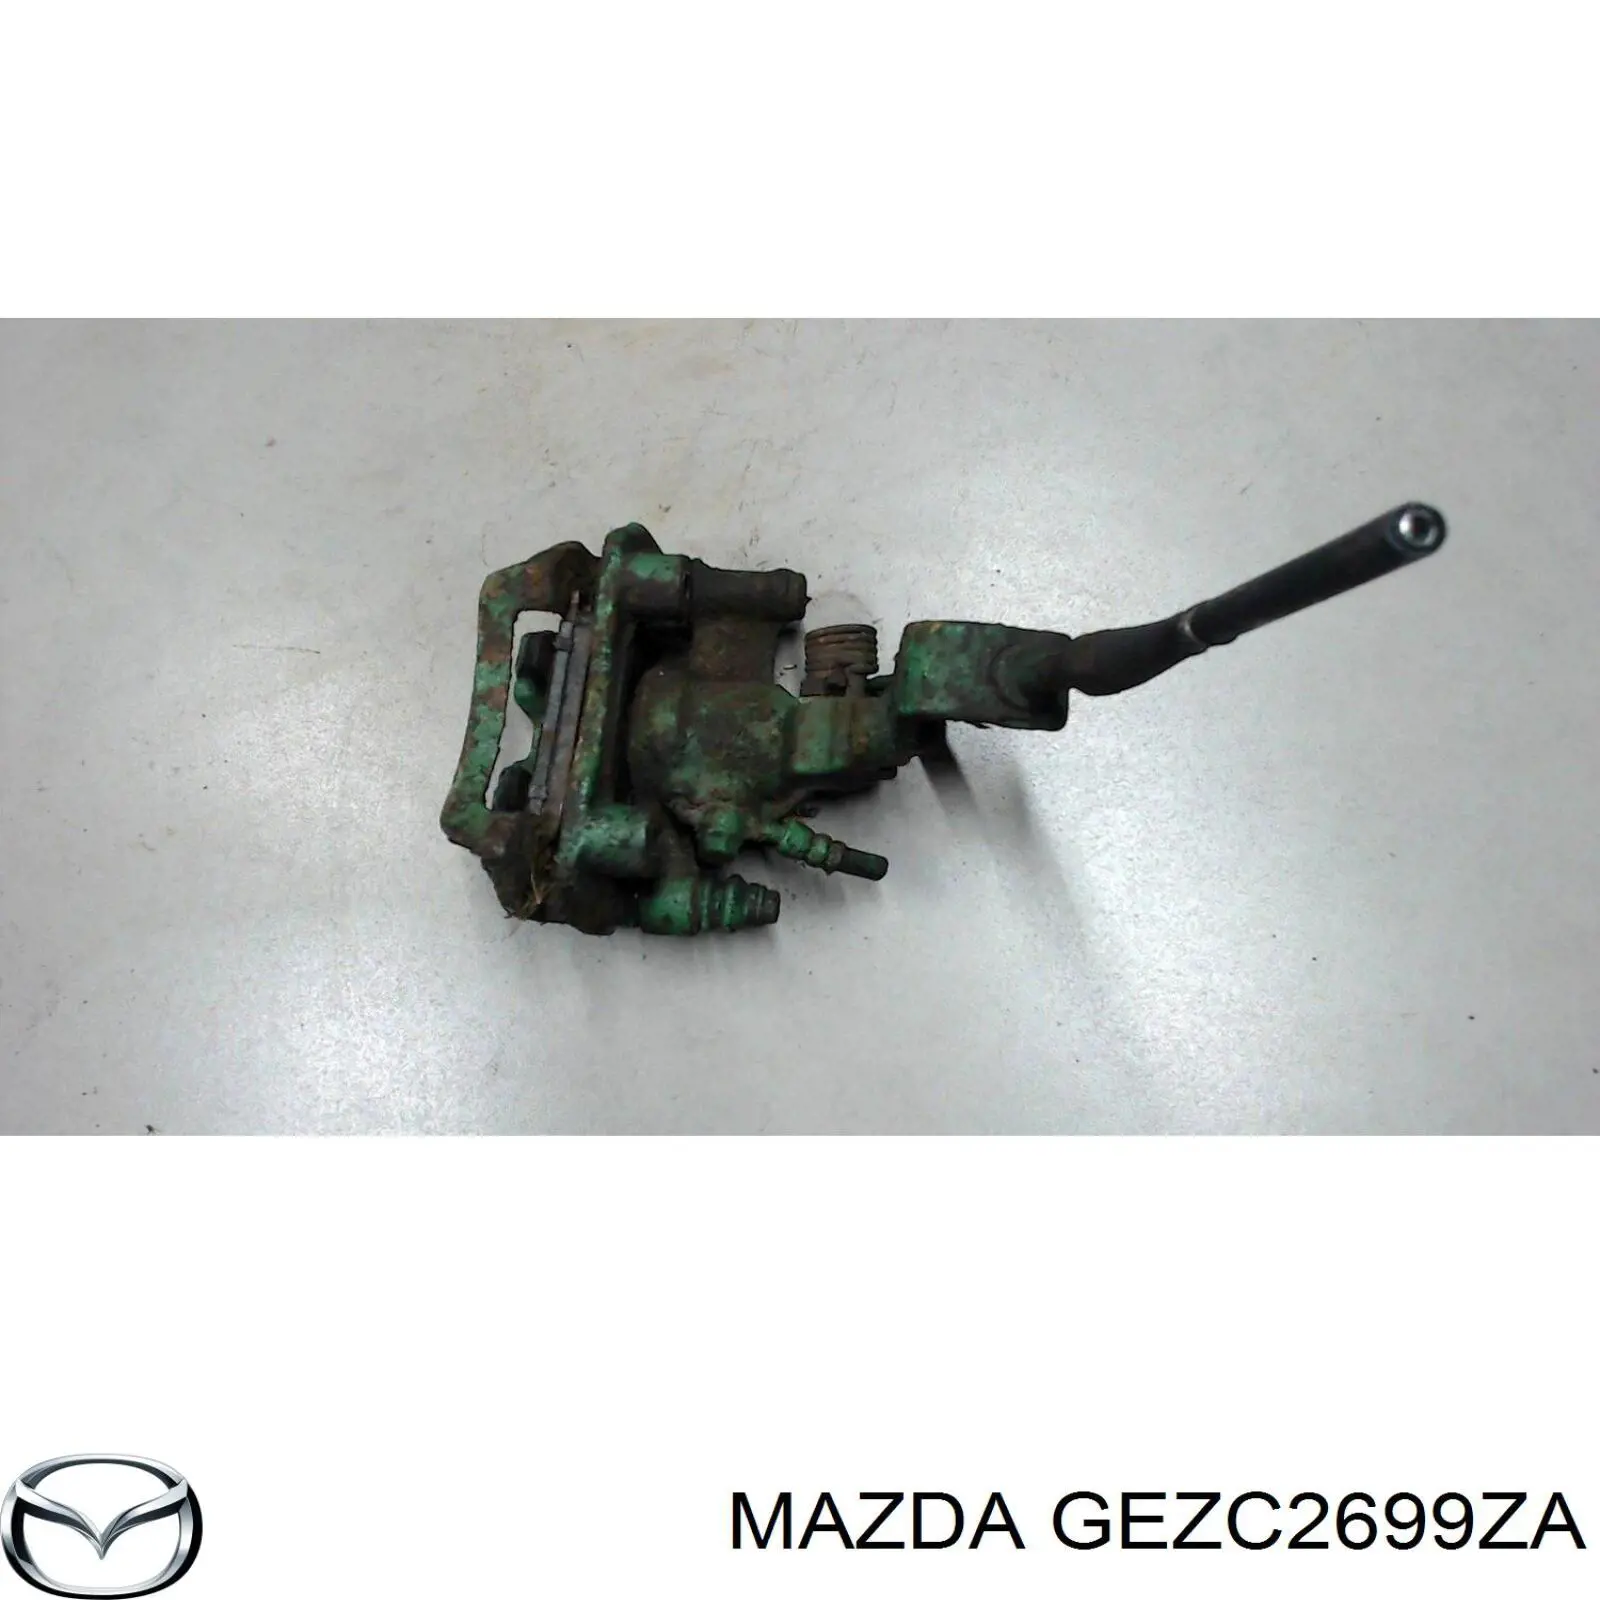 GEZC2699ZA Mazda суппорт тормозной задний левый